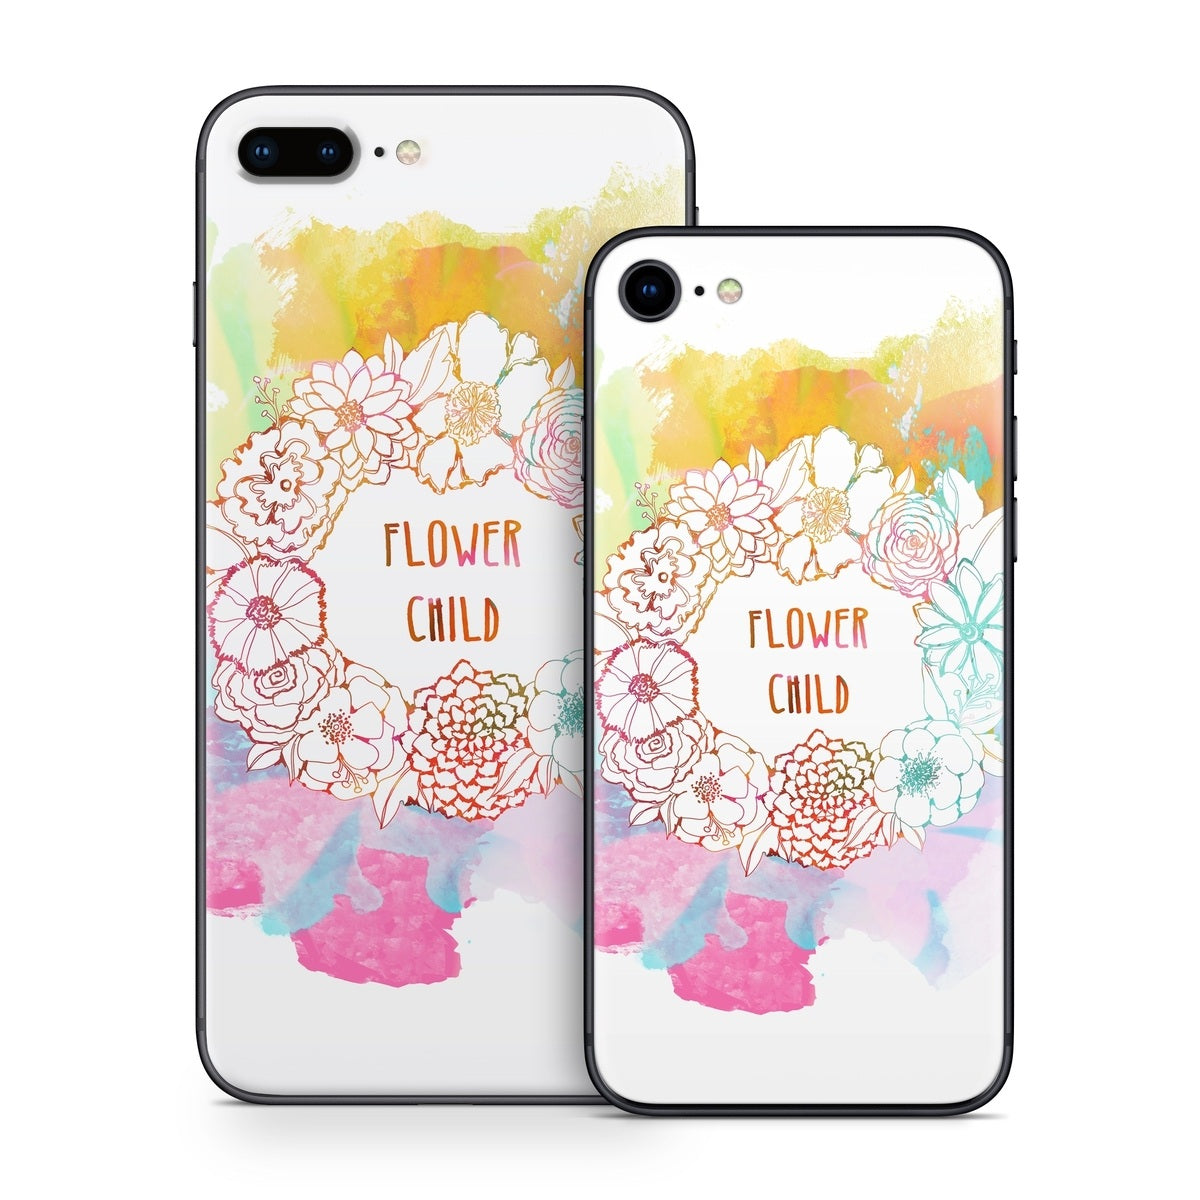 Flower Child - Apple iPhone 8 Skin